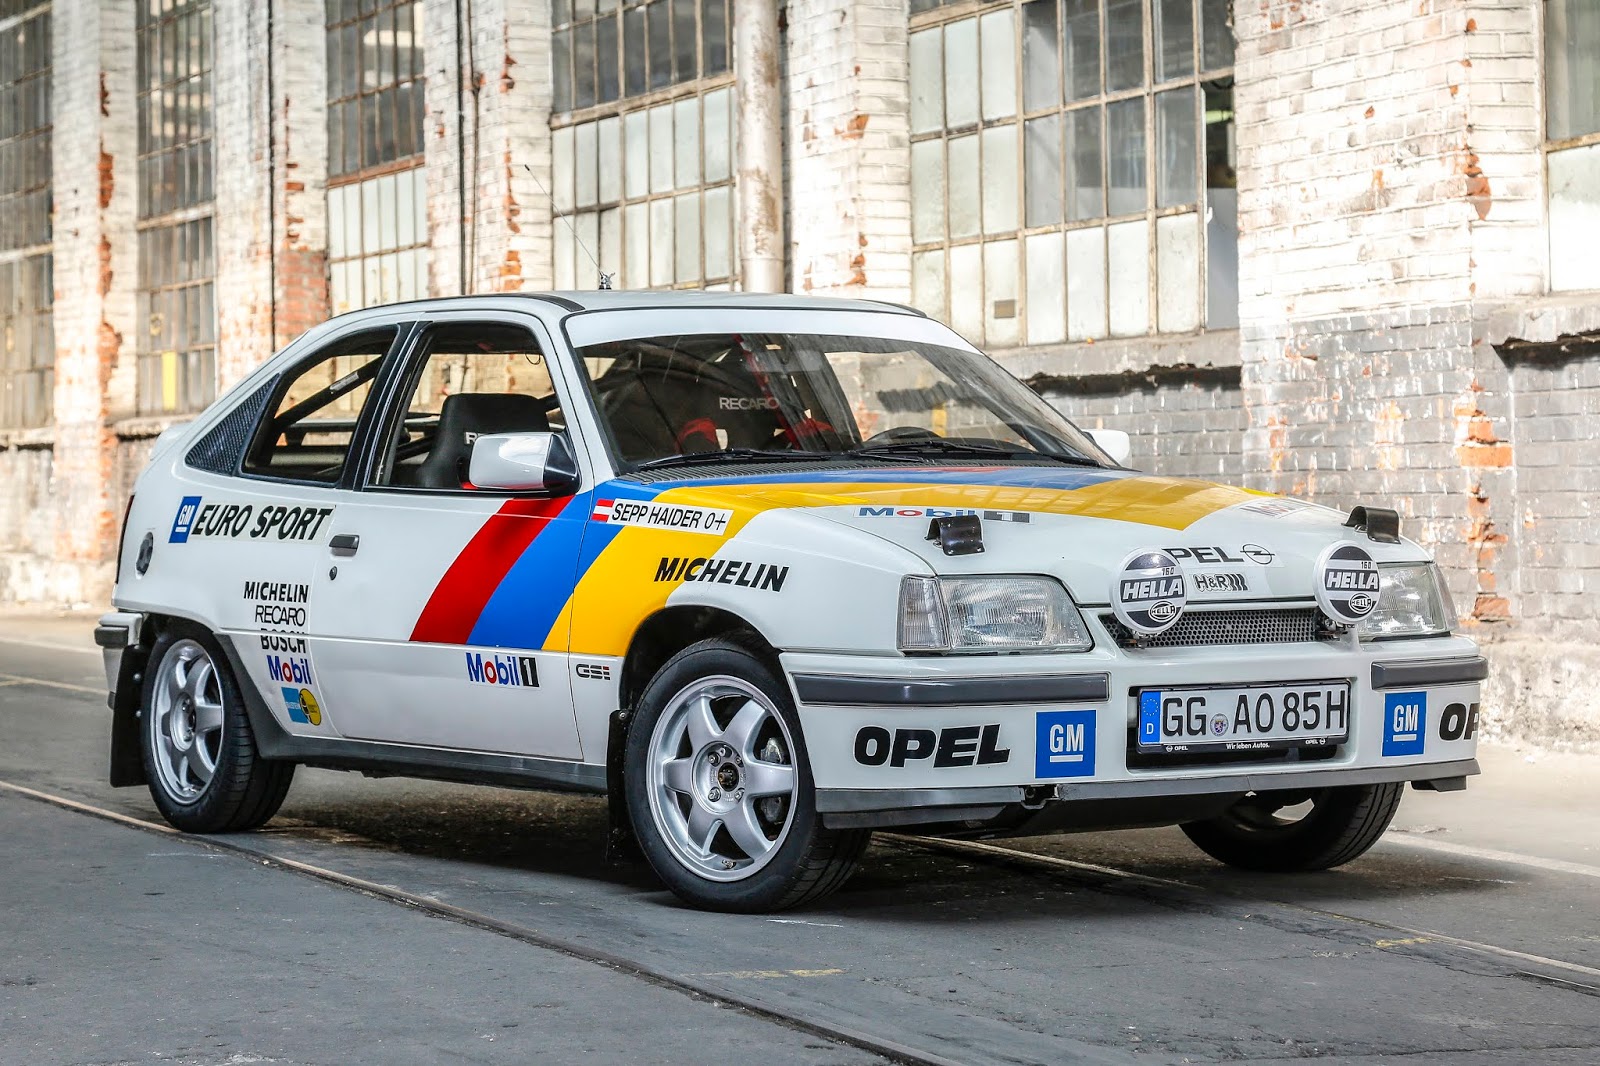 1985 Opel Kadett E Rallye 506637 180 ιστορικά αυτοκίνητα της Opel στη γραμμή εκκίνησης